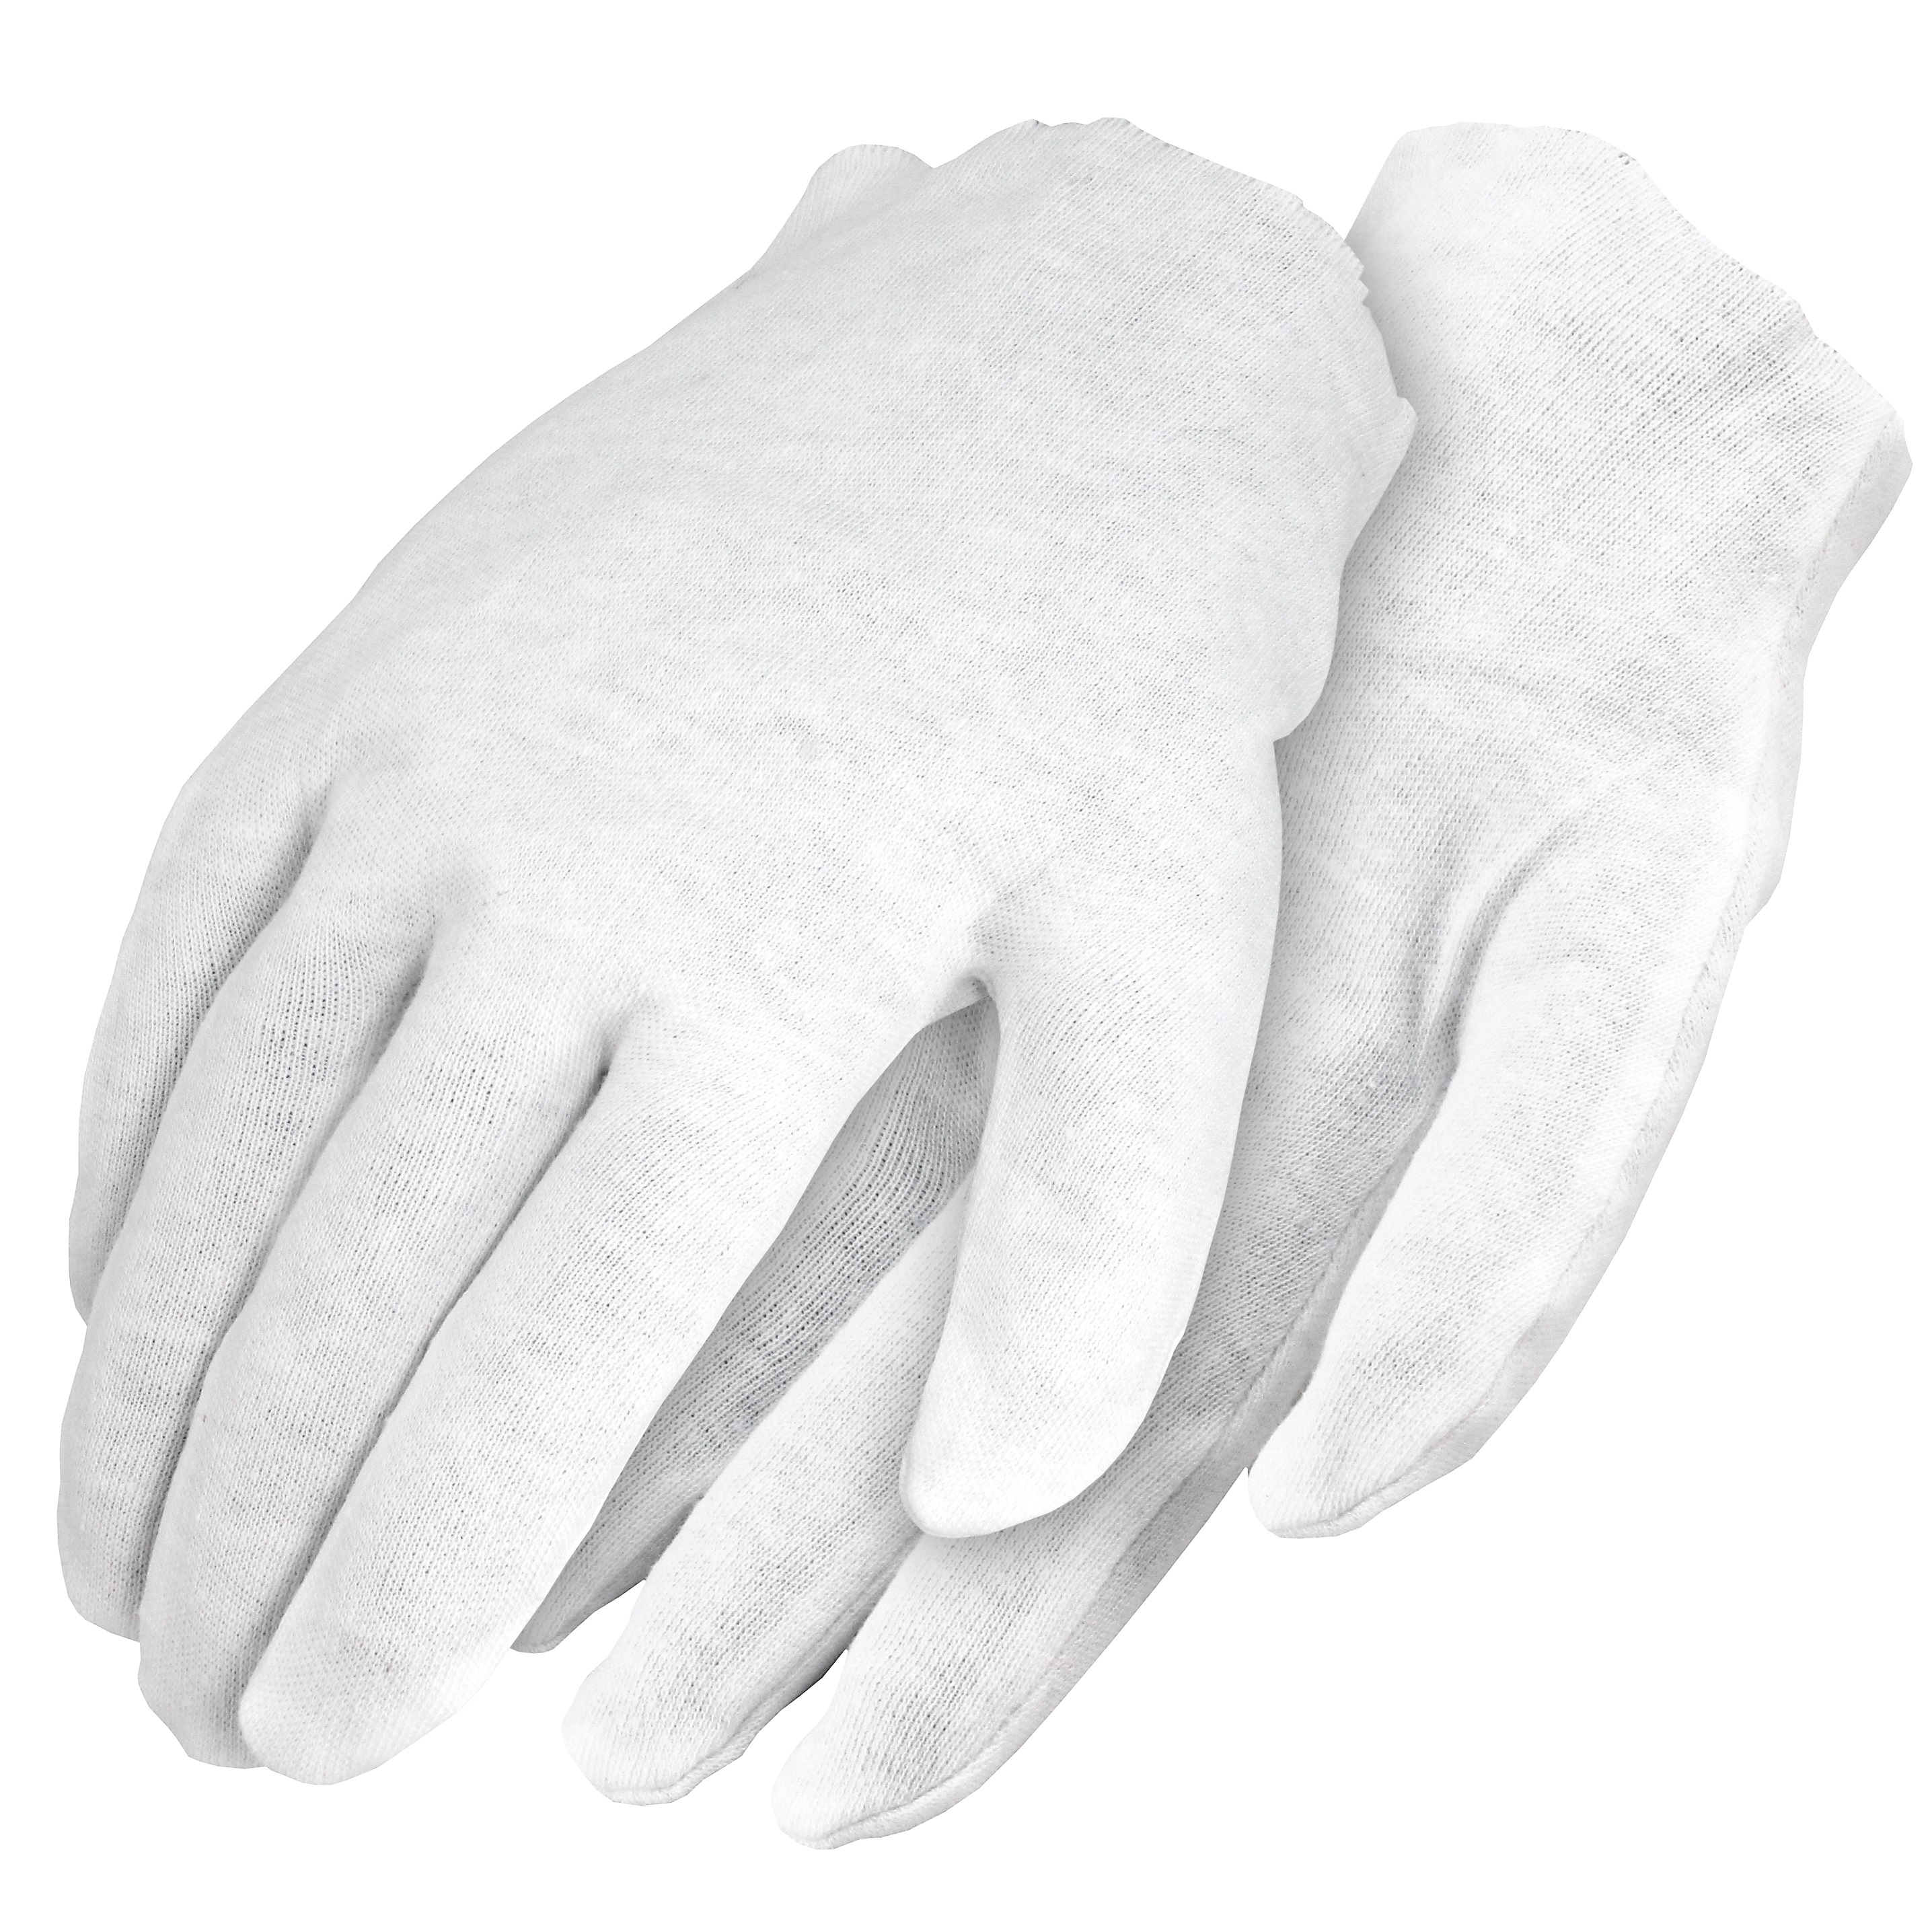 Cotton Inspection Gloves, Ladies' Mediumweight